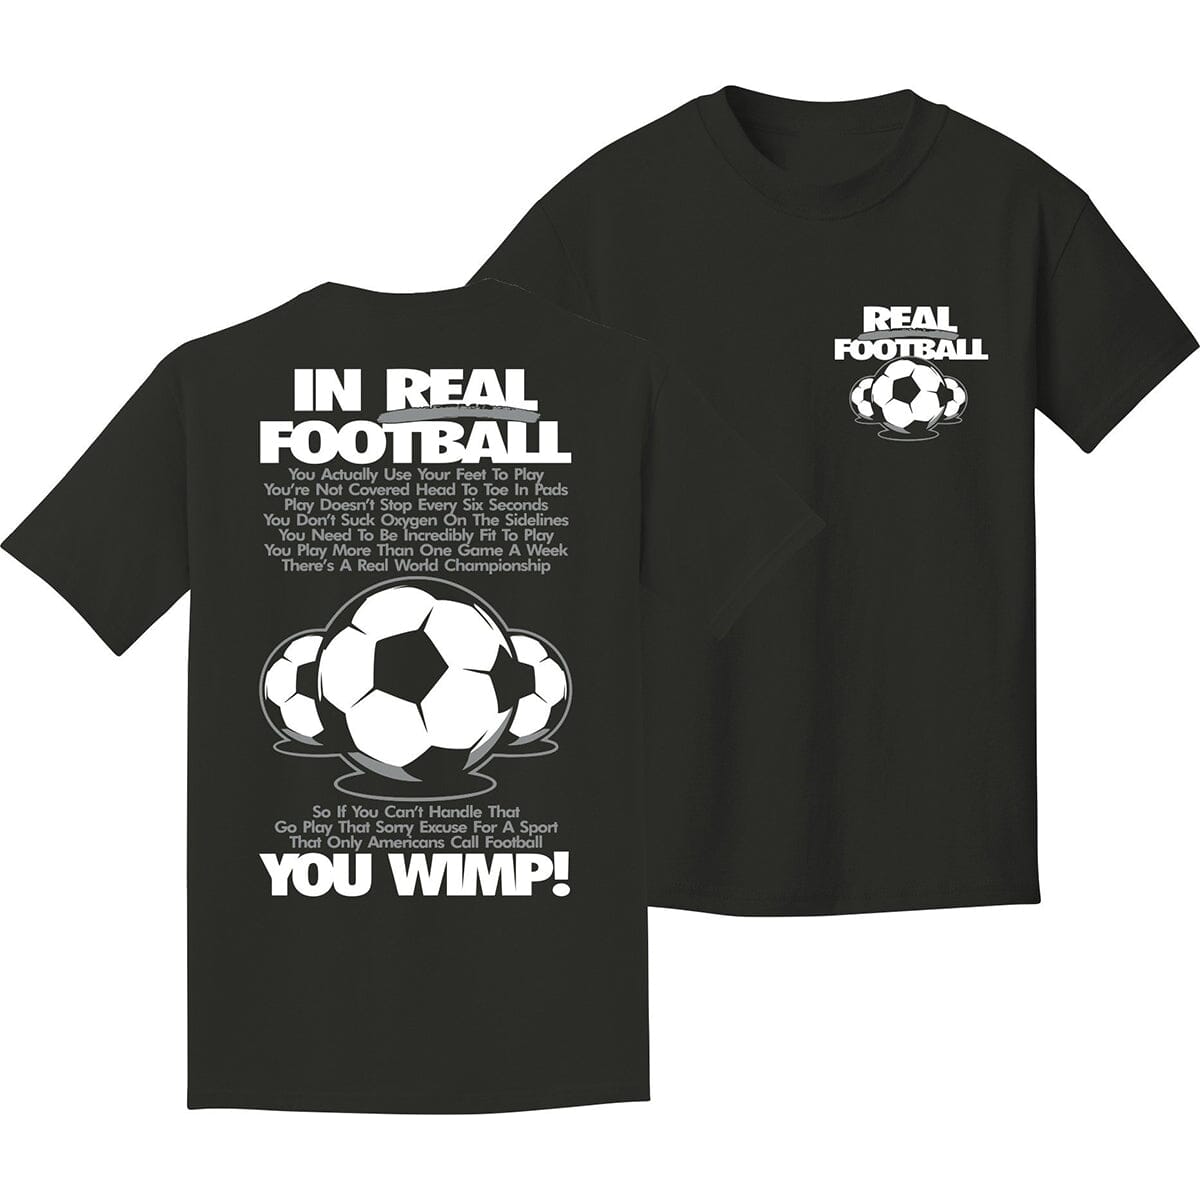 Soccer Championship - Soccer T-shirts